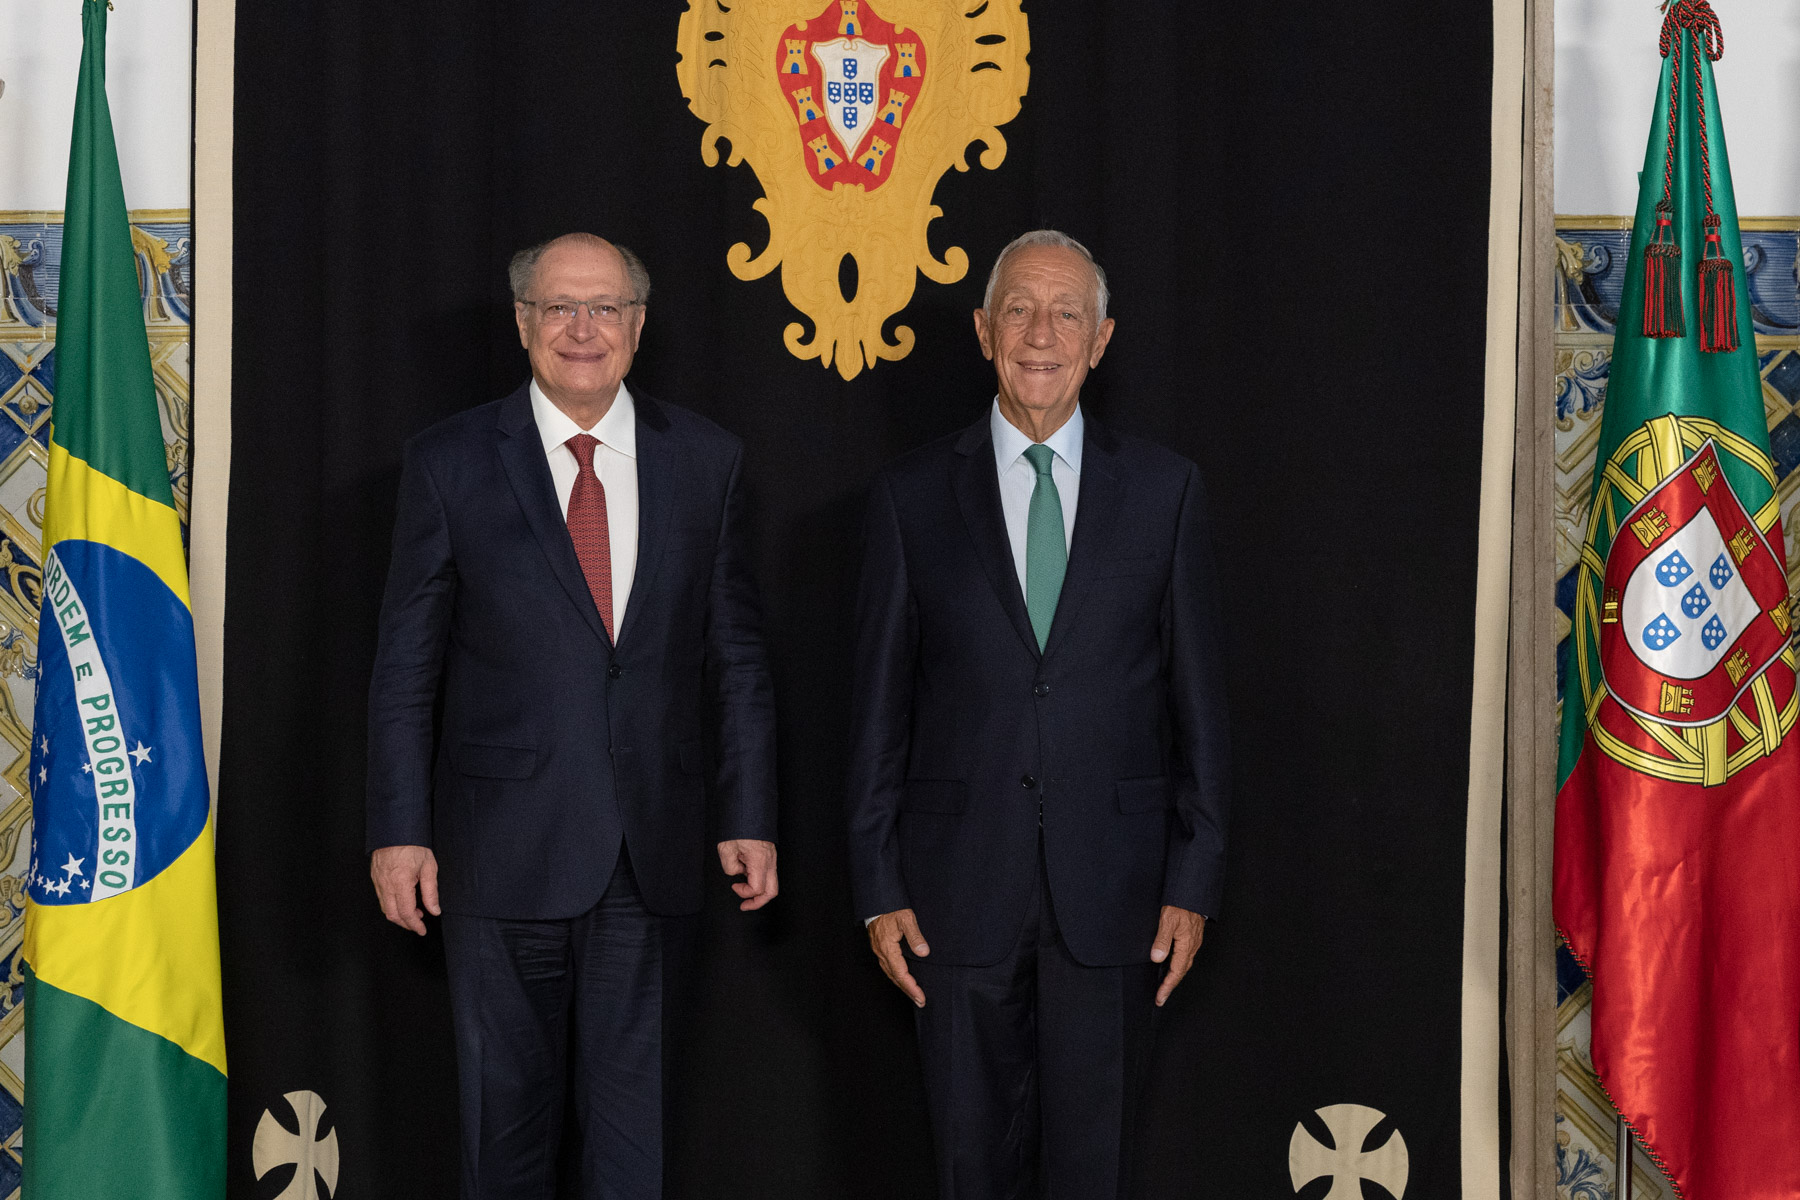 Presidência da República Portuguesa